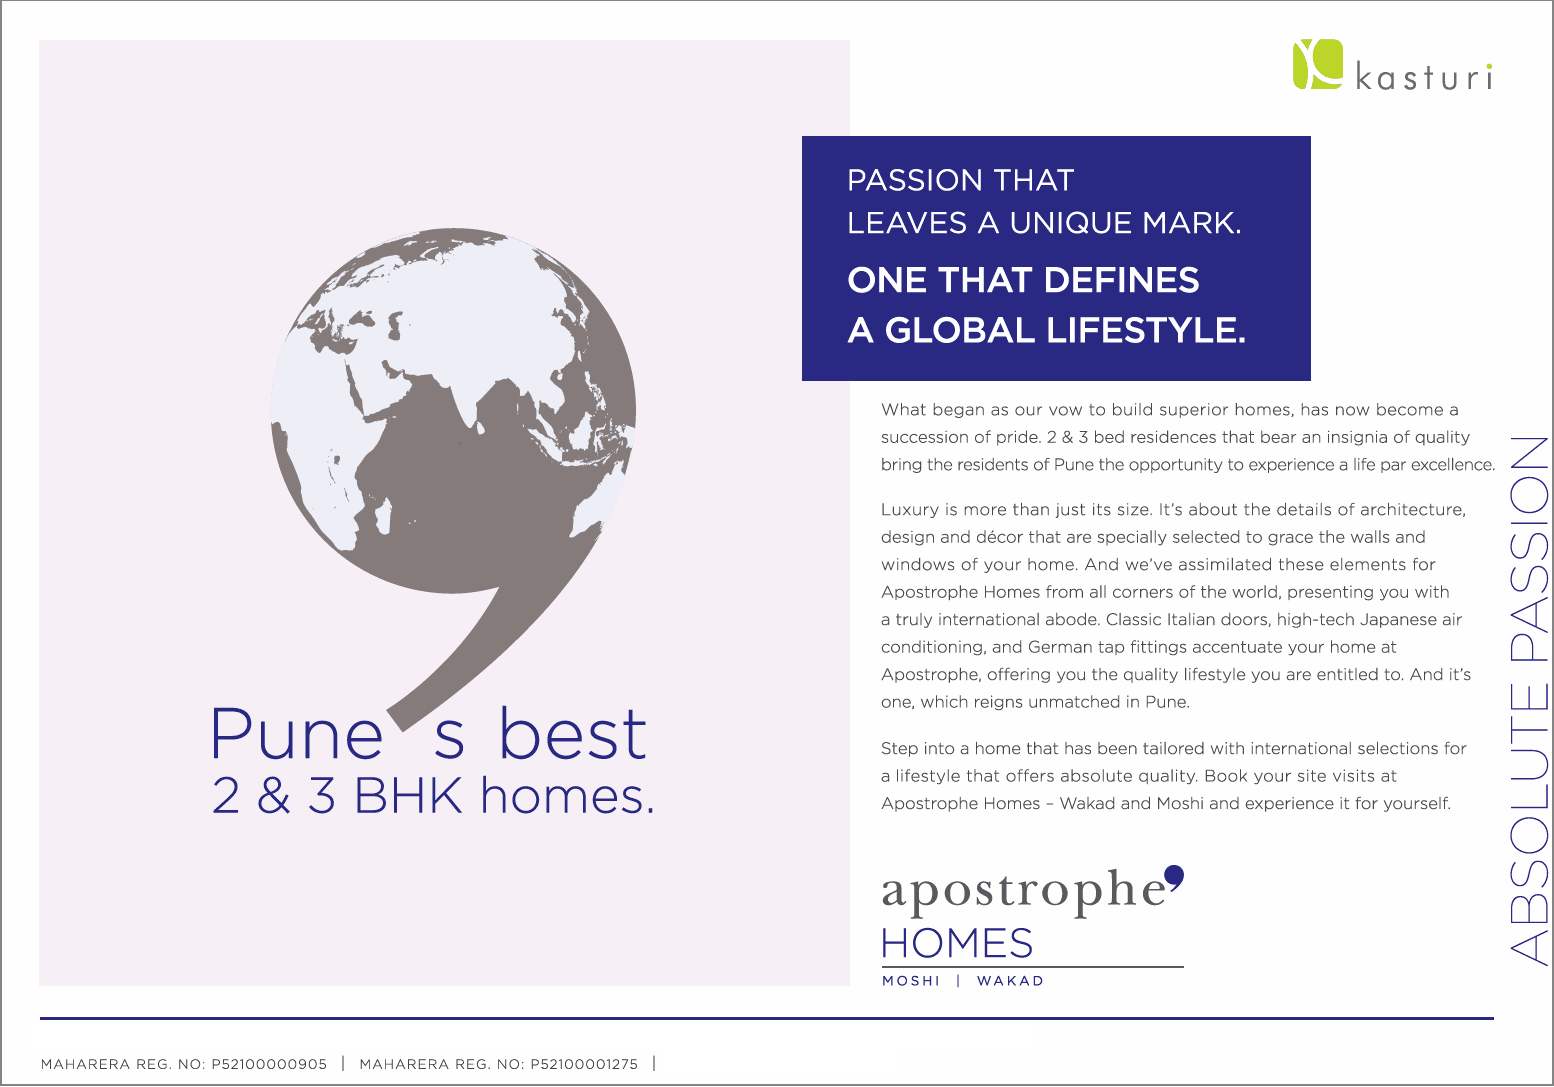 Book 2 & 3 BHK apartment at Kasturi Apostrophe Homes, Pune Update